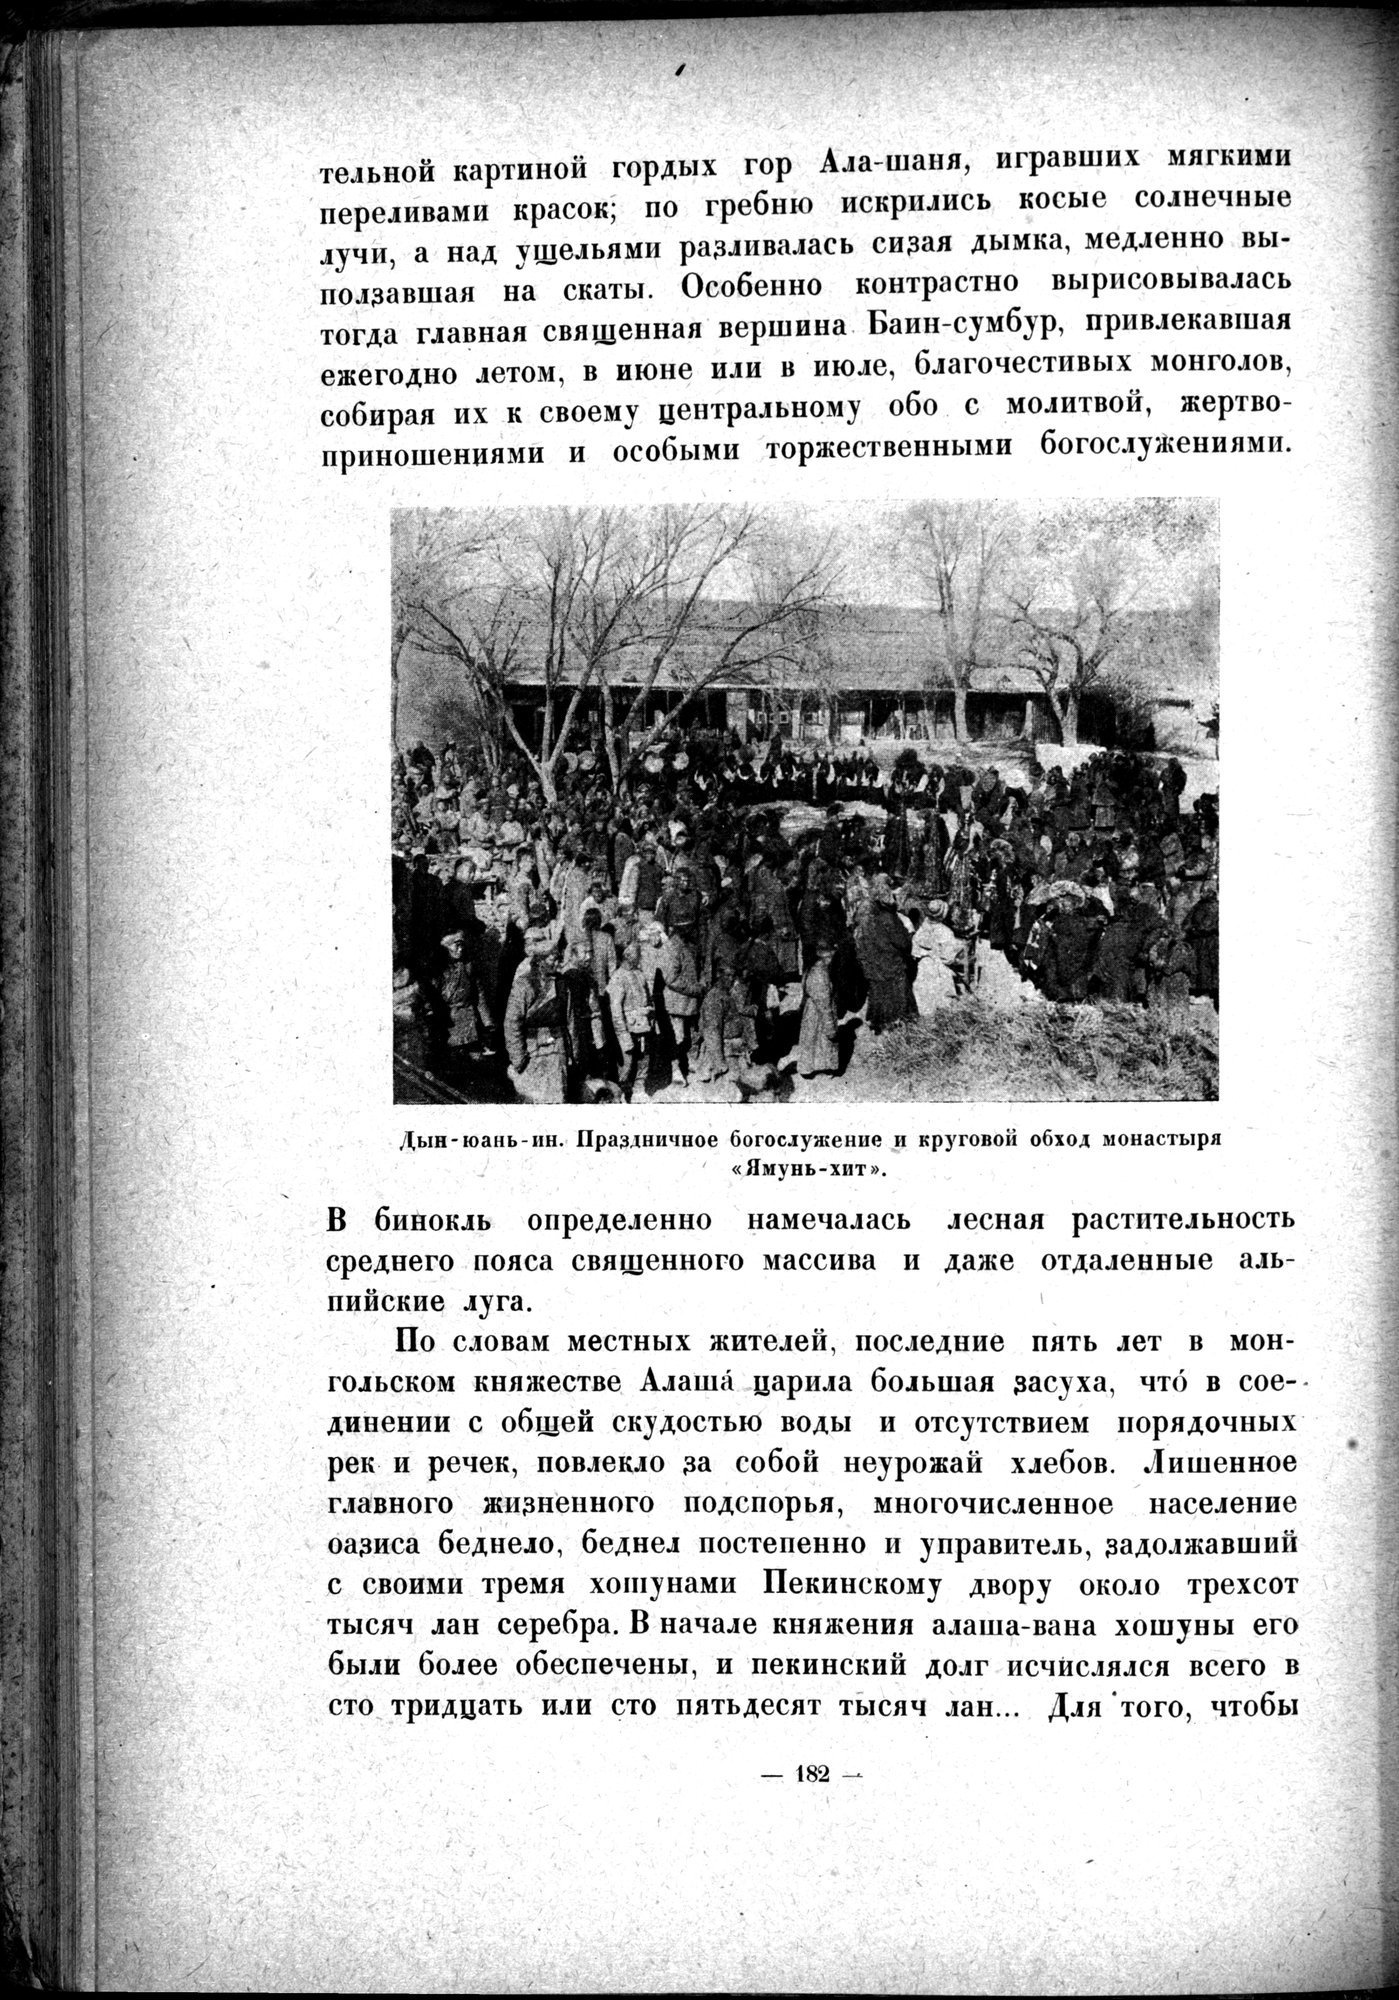 Mongoliya i Amdo i mertby gorod Khara-Khoto : vol.1 / Page 216 (Grayscale High Resolution Image)